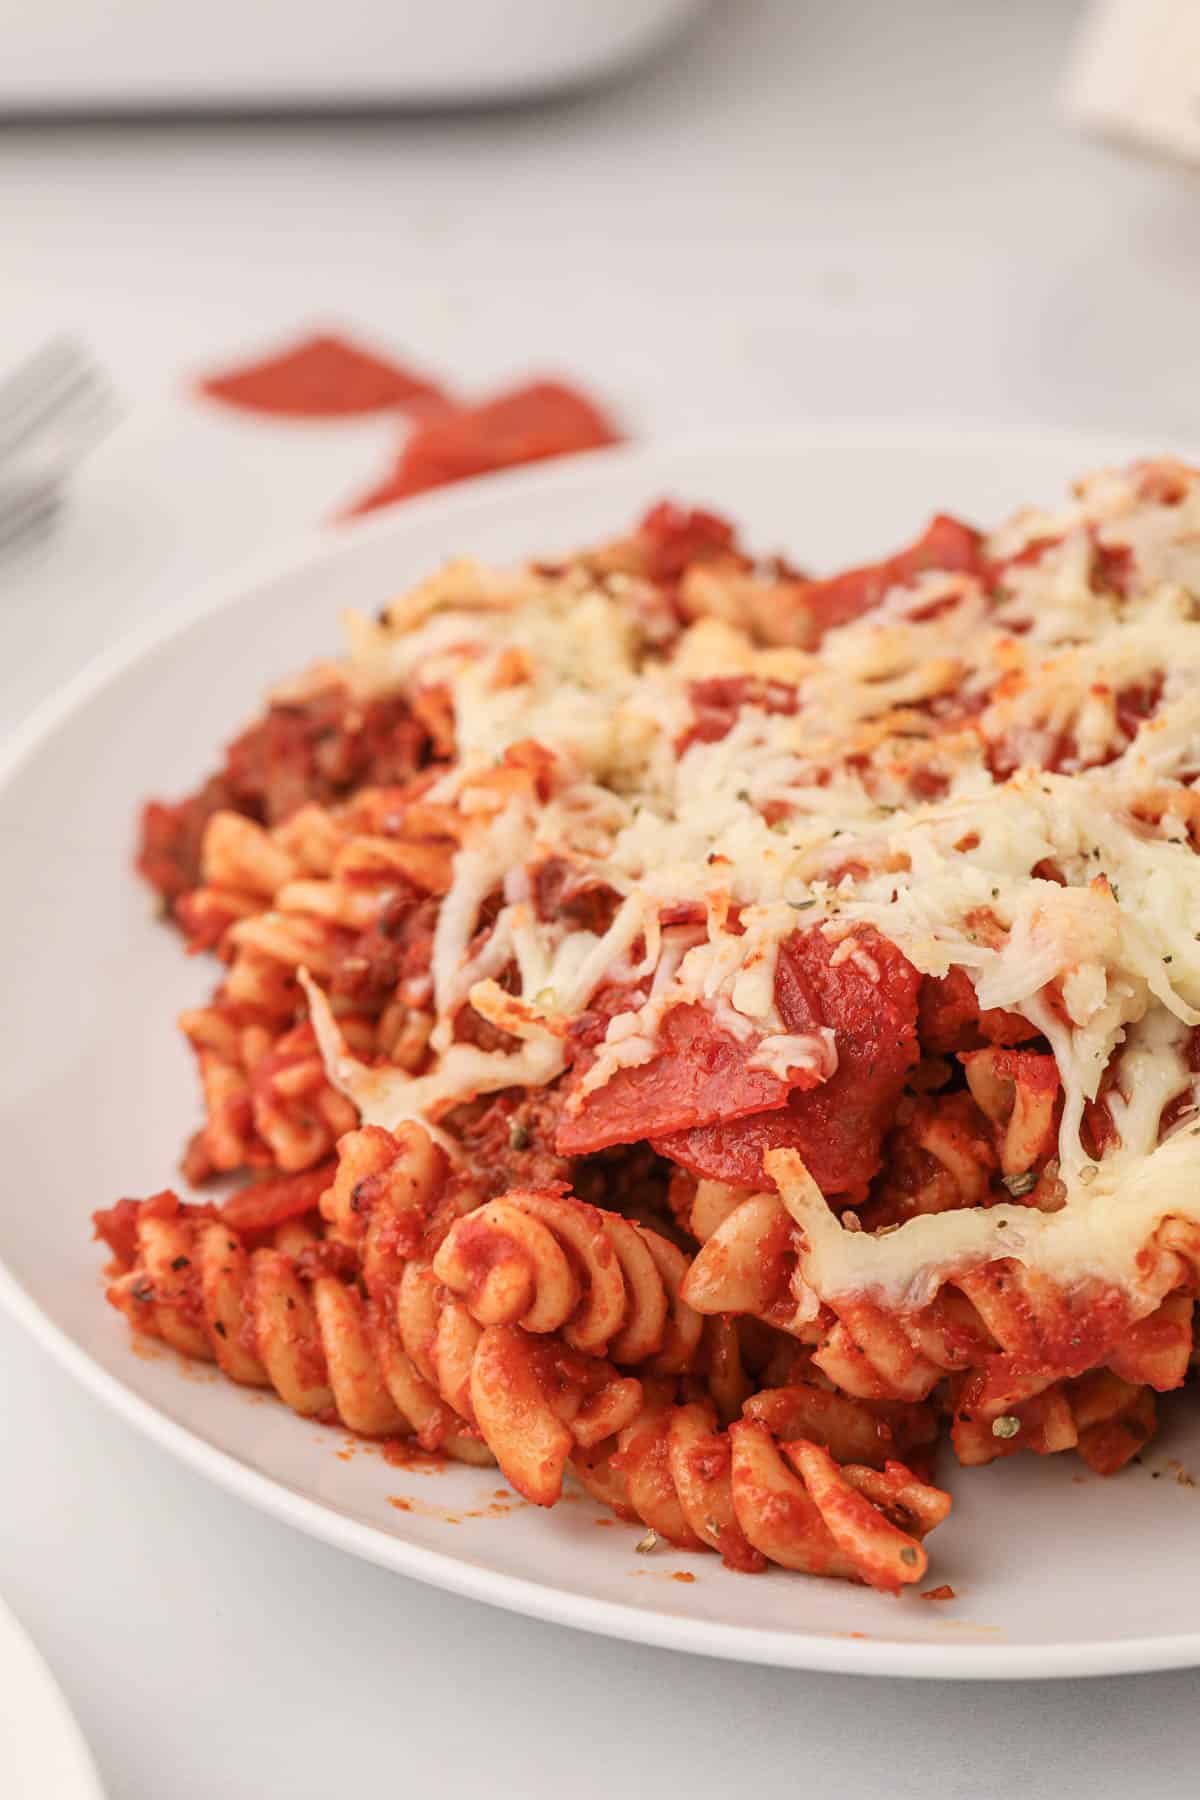 A close image of rotini pasta in marinara sauce with Italian sausage, pepperoni, and mozzarella cheese.